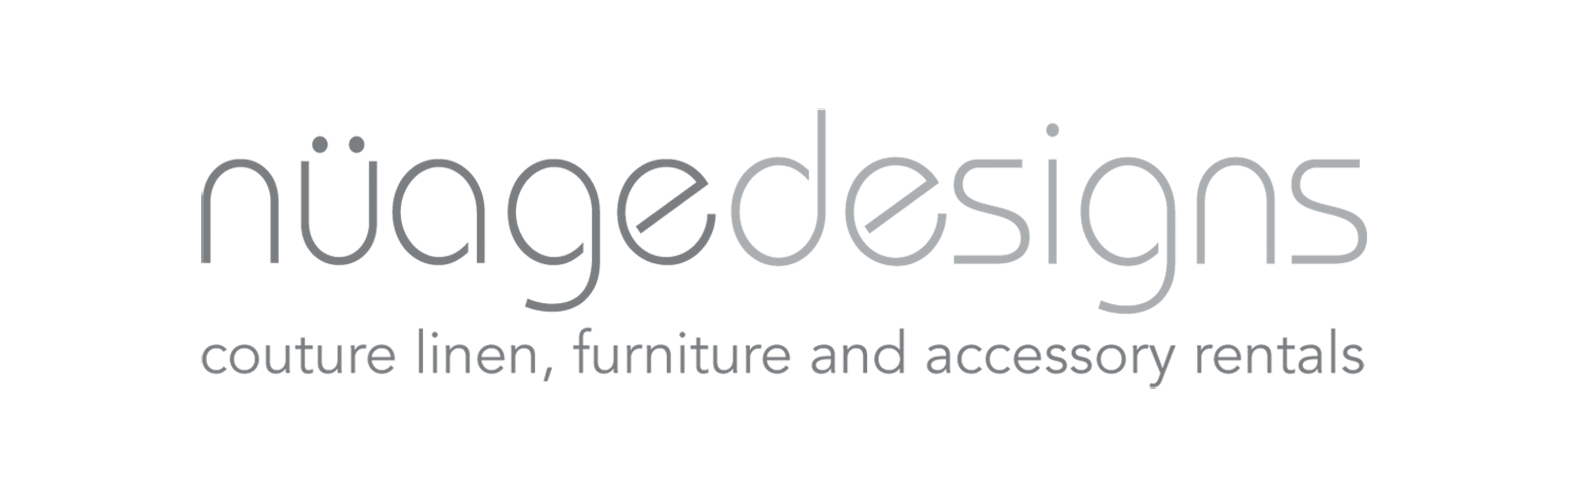 Couture Furniture Logo - Nüage Designs Linen & Furniture Rentals for Weddings & Events